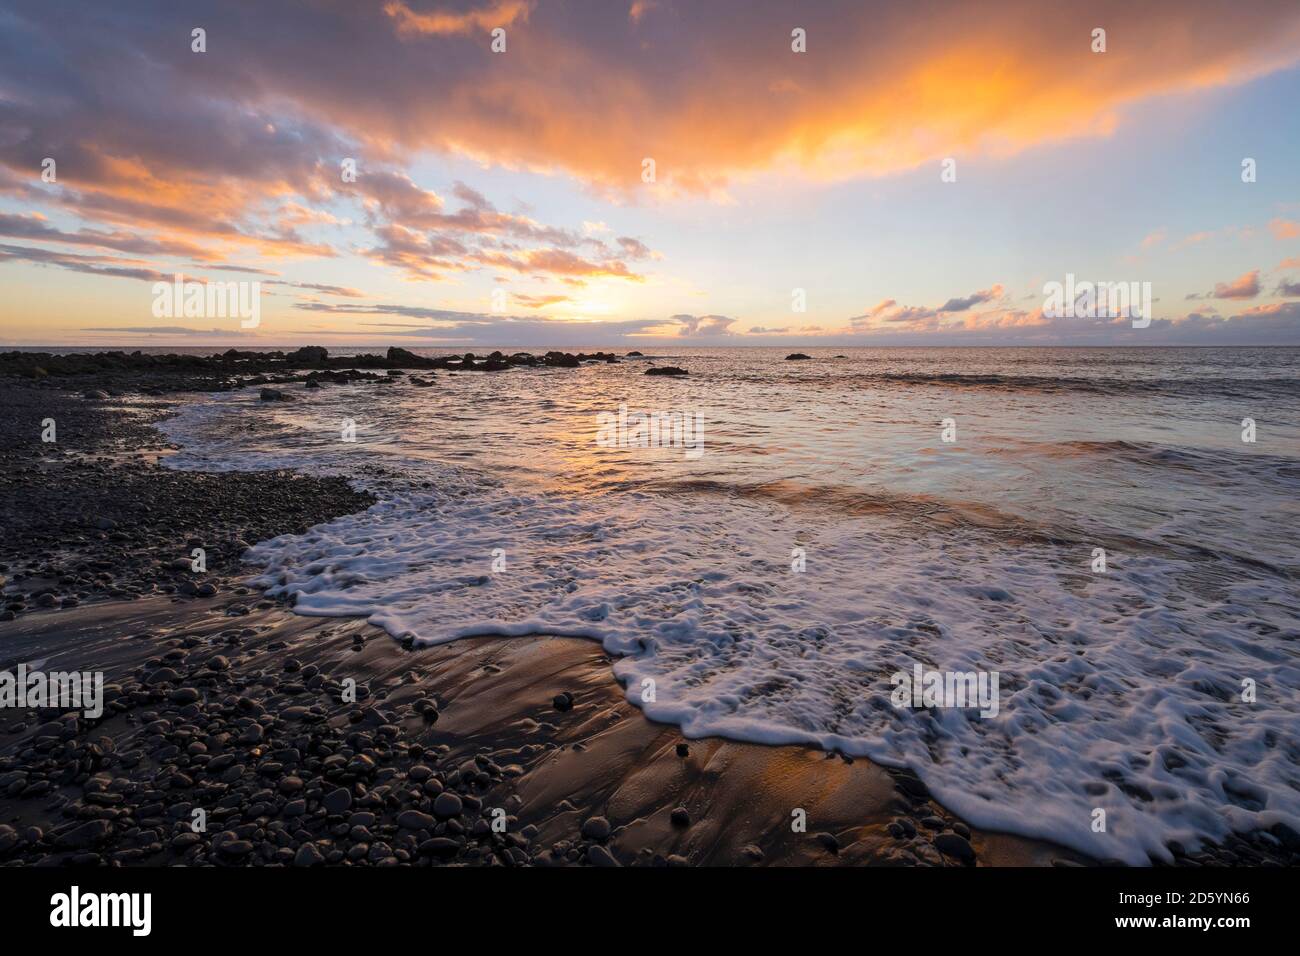 Spain, Canary Islands, La Gomera, Valle Gran Rey, evening at shingle beach Stock Photo